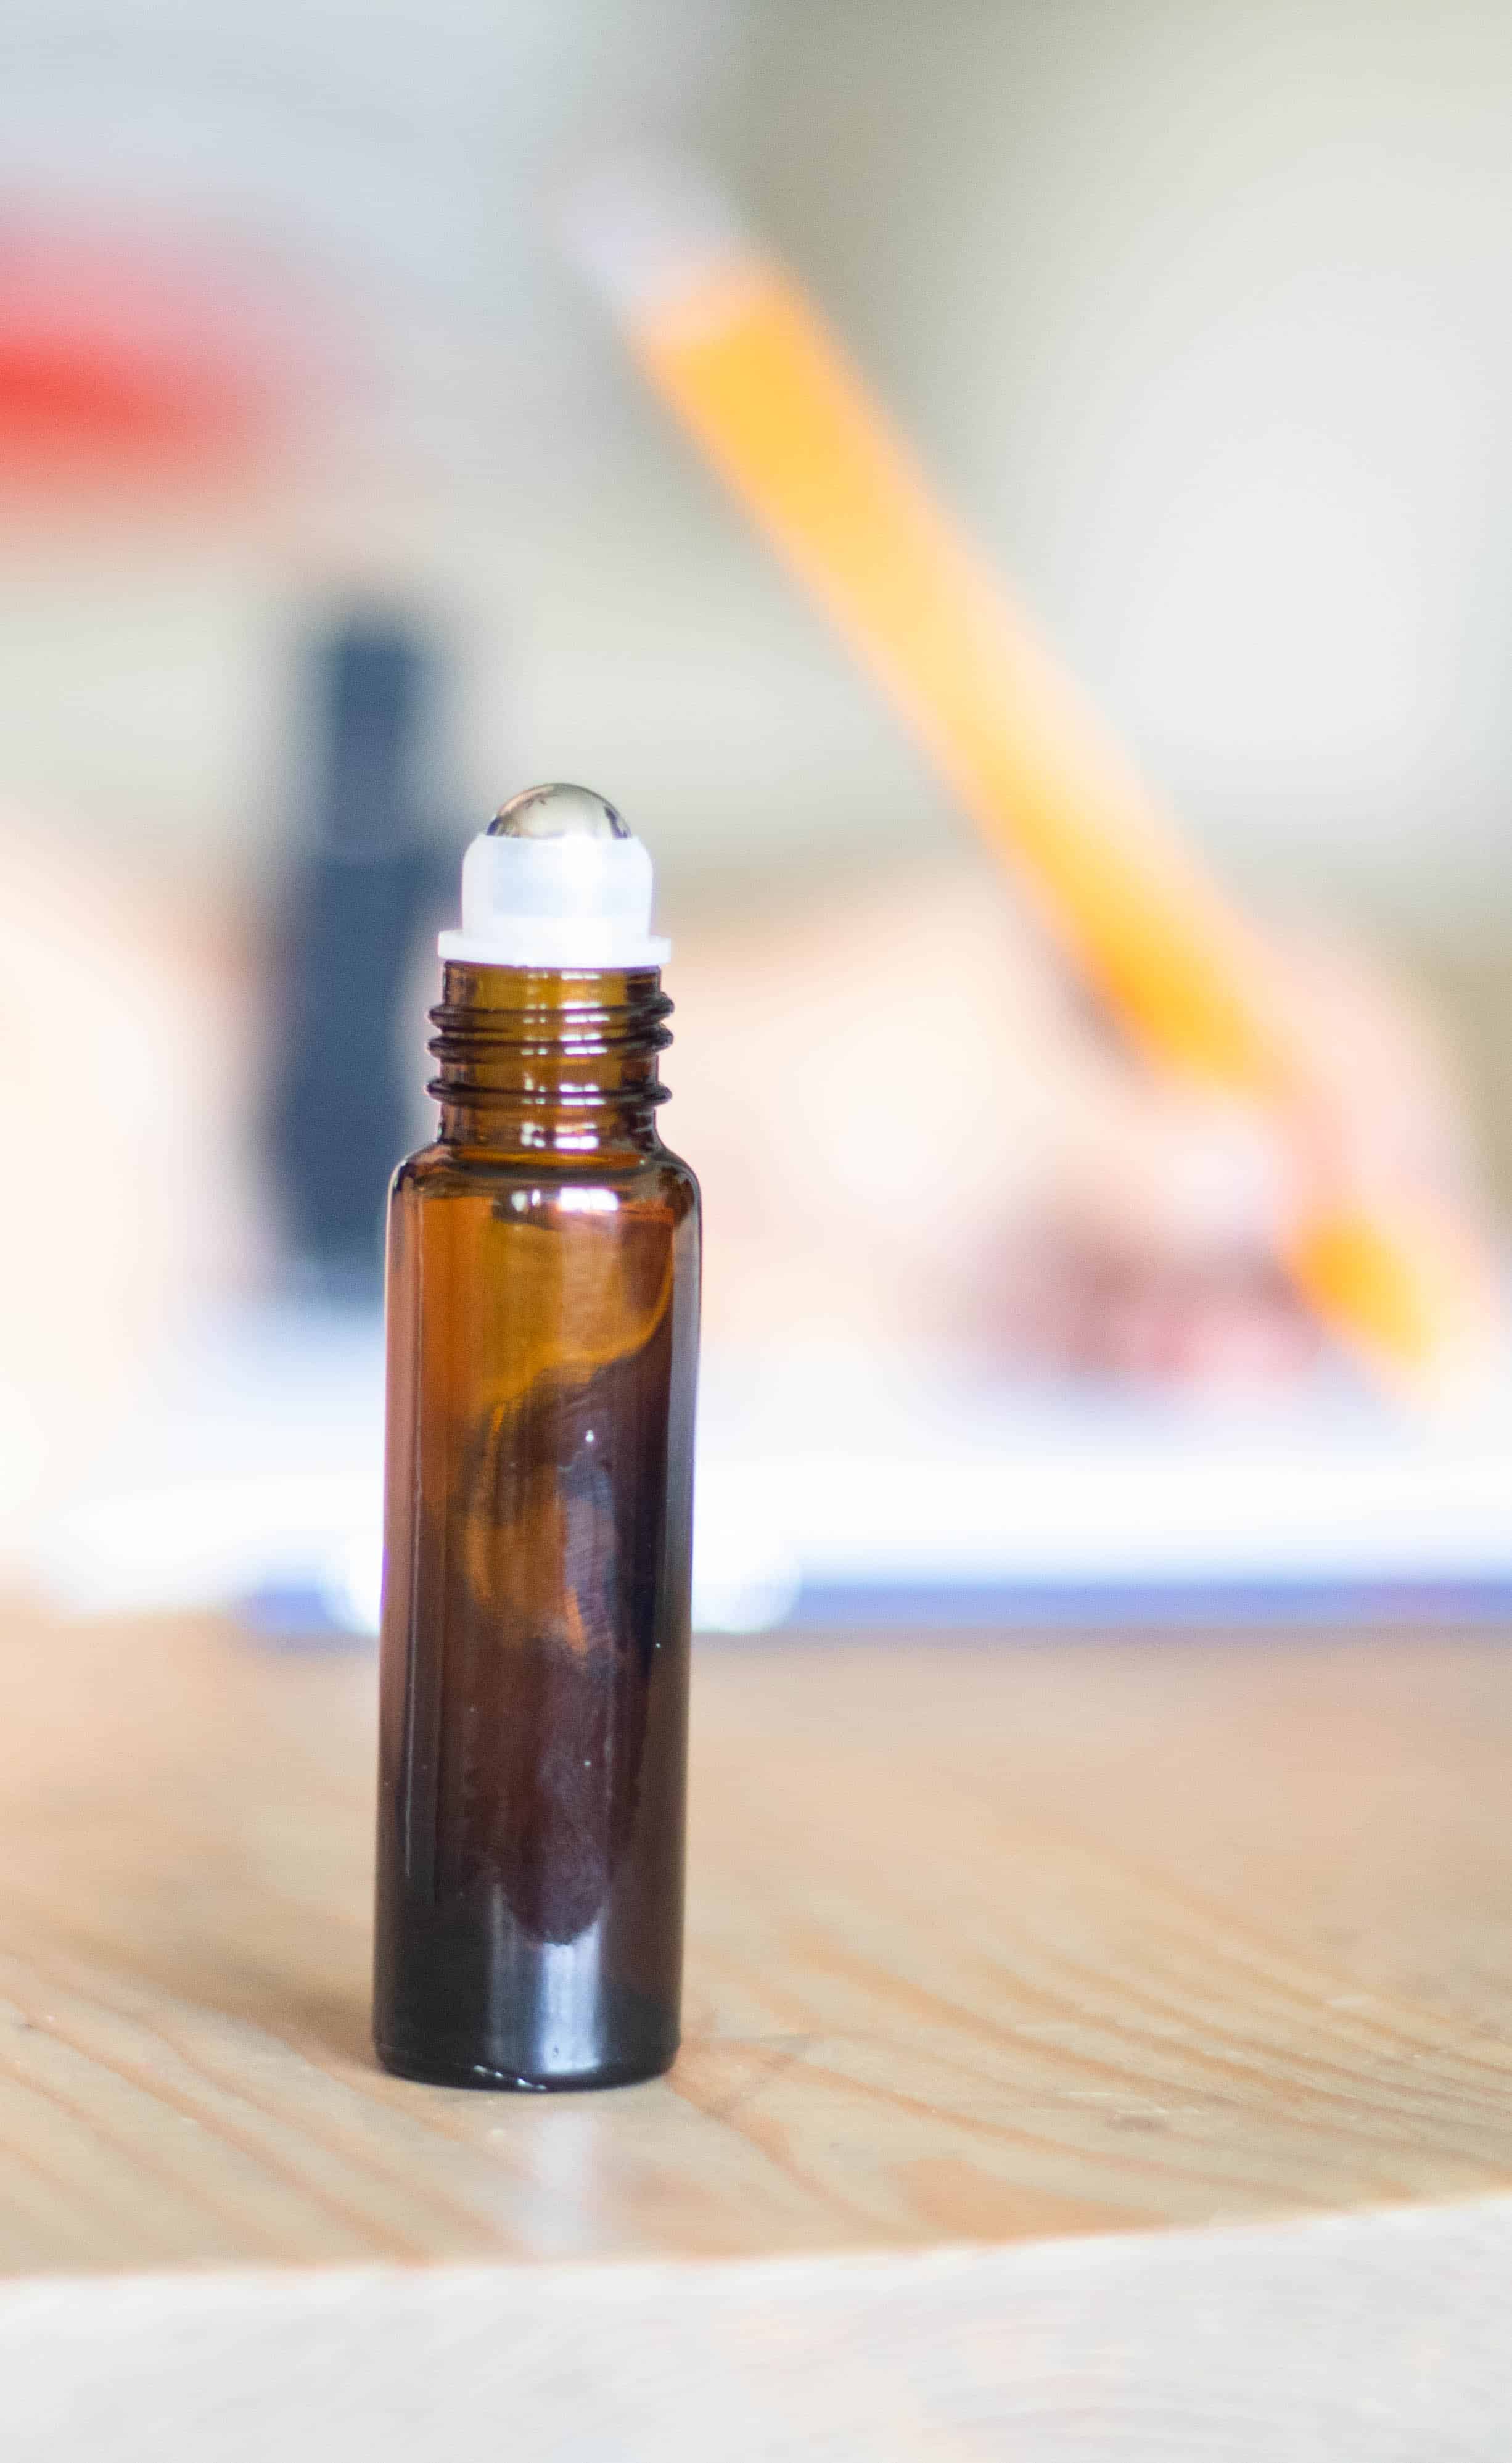 Amber essential oil roller bottle on wooden table.